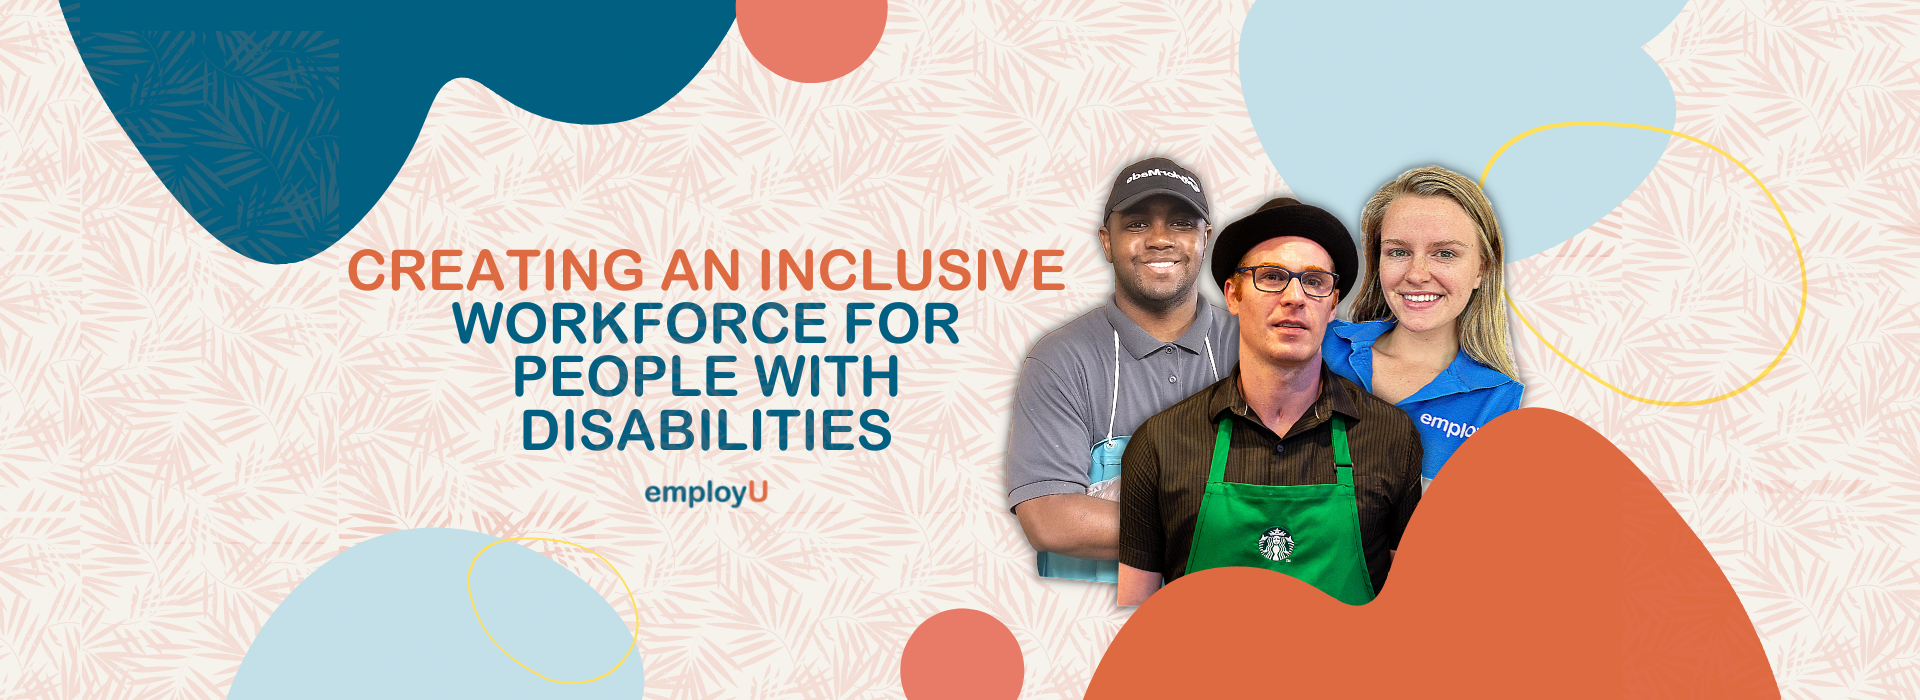 employU creating an Inclusive Workforce